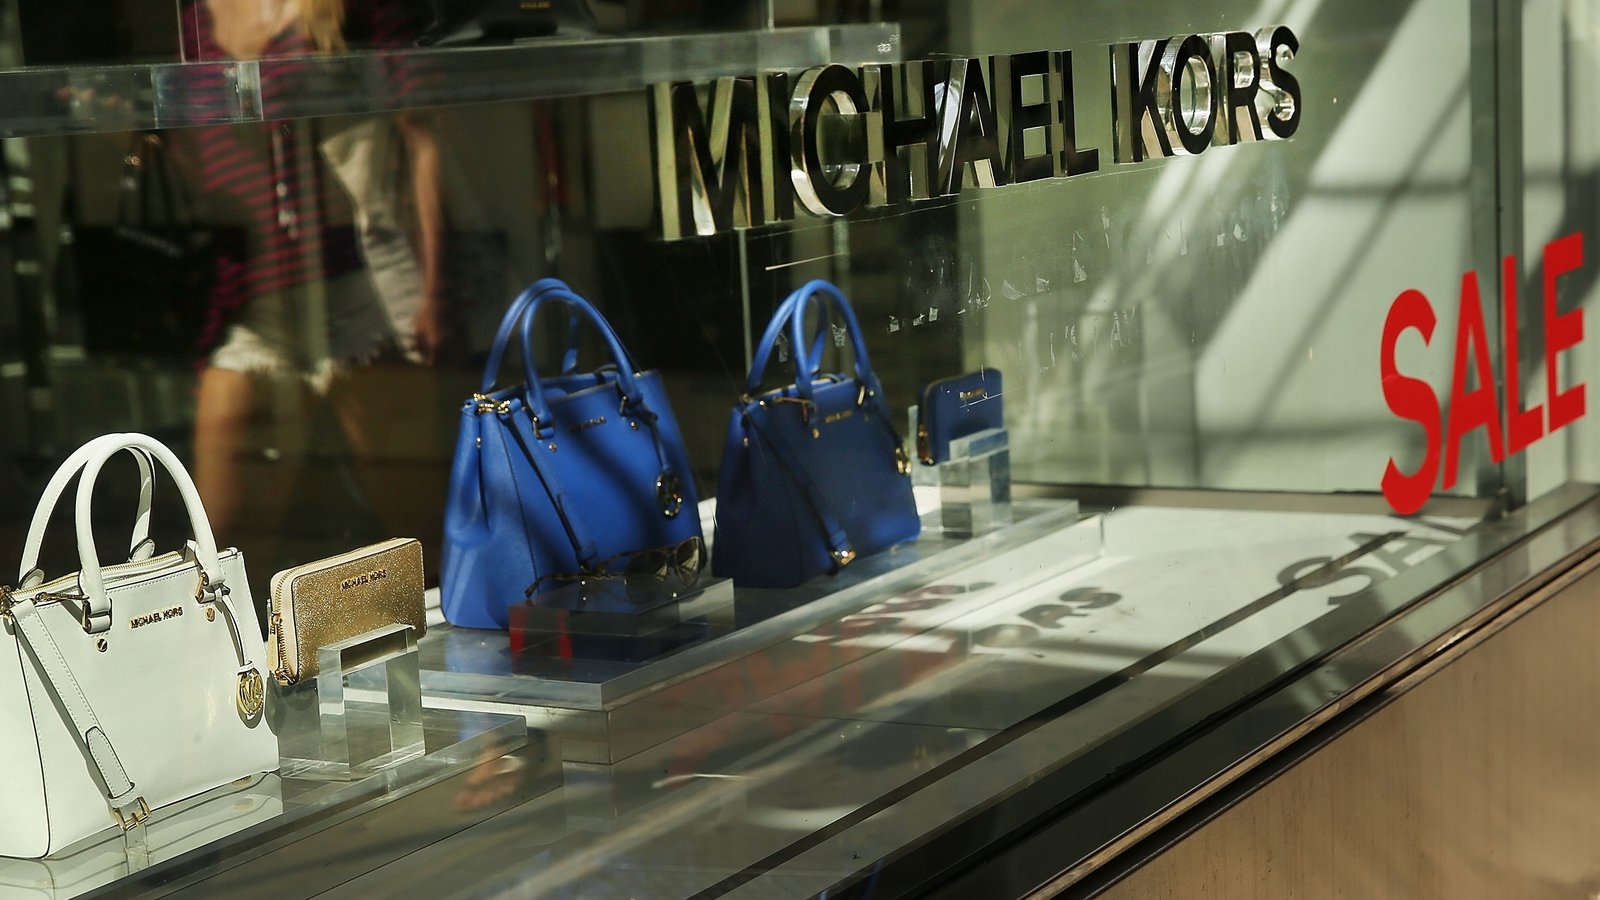 Michael Kors owner Capri cuts forecasts as demand slows, shares